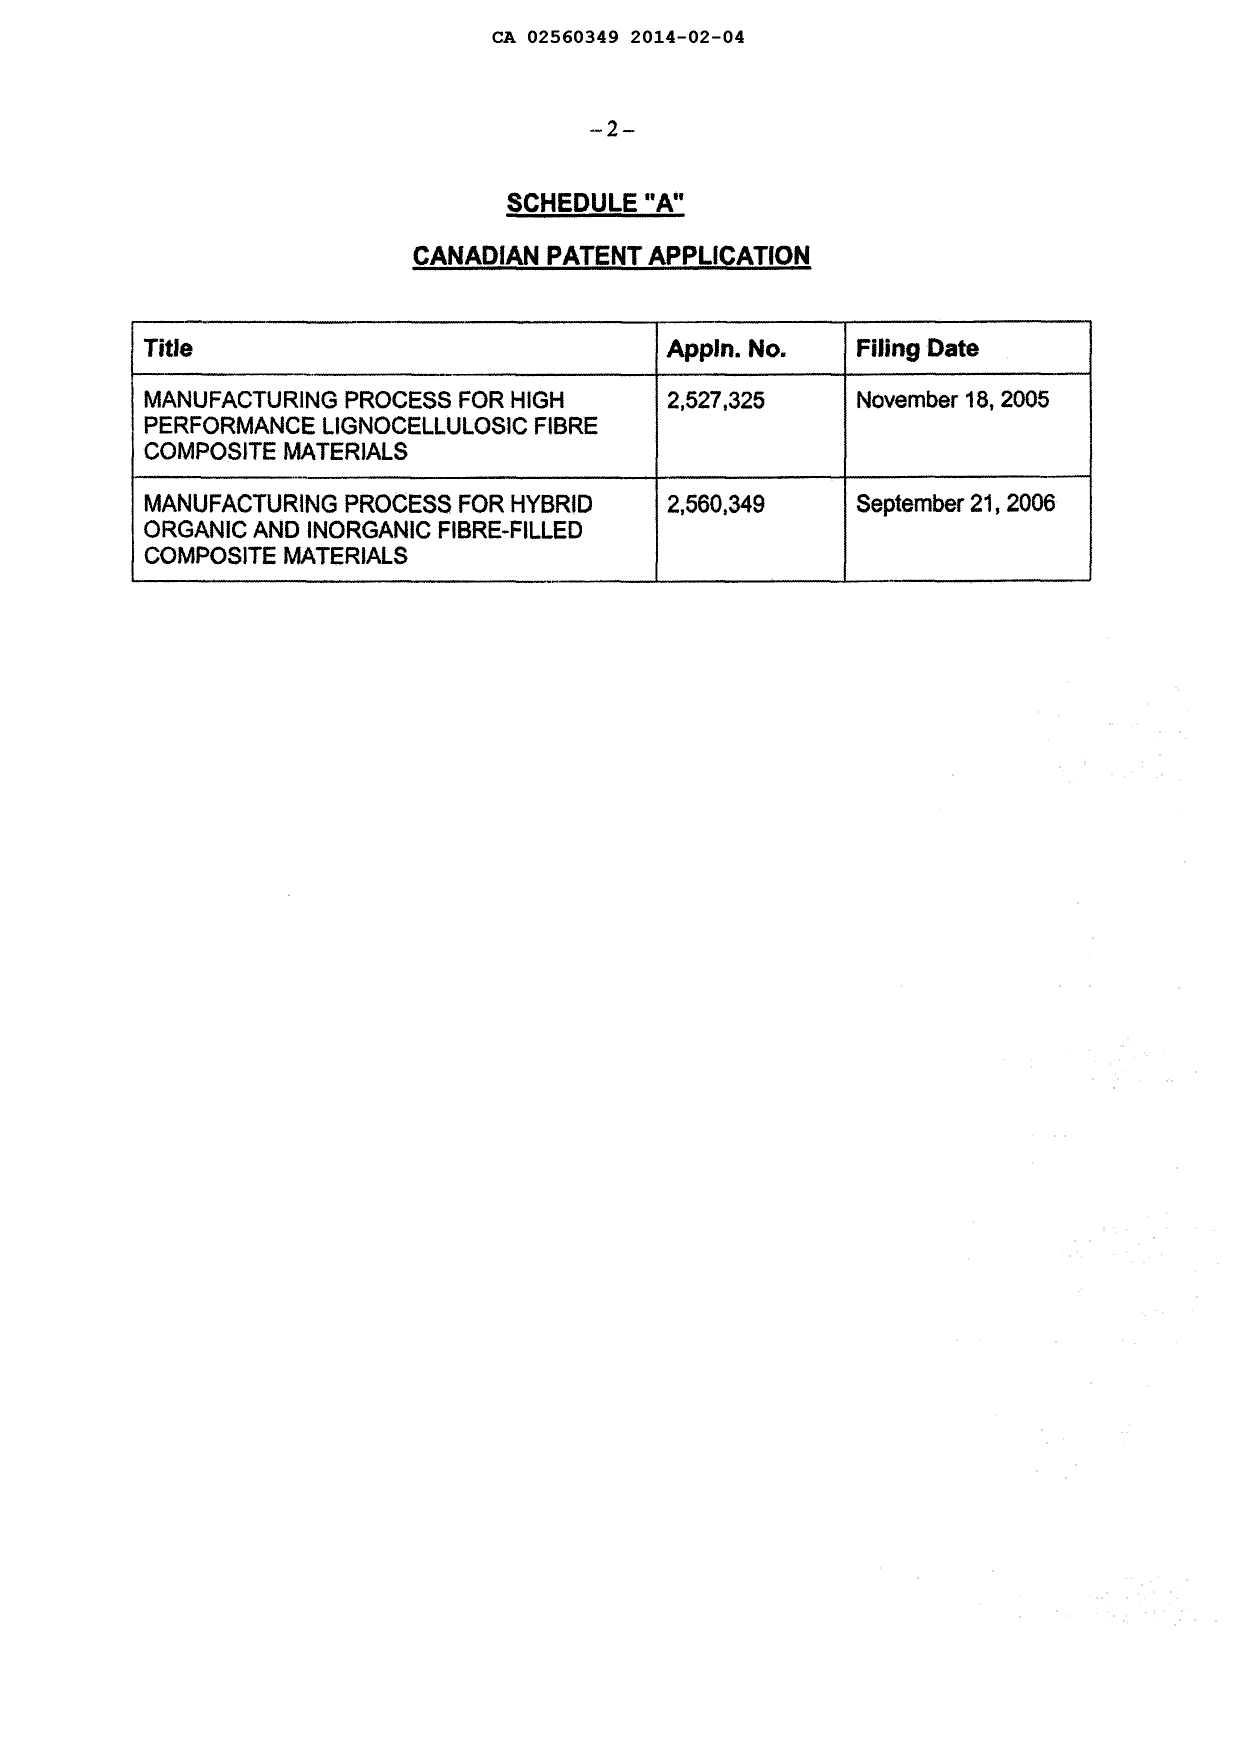 Canadian Patent Document 2560349. Correspondence 20131204. Image 6 of 6